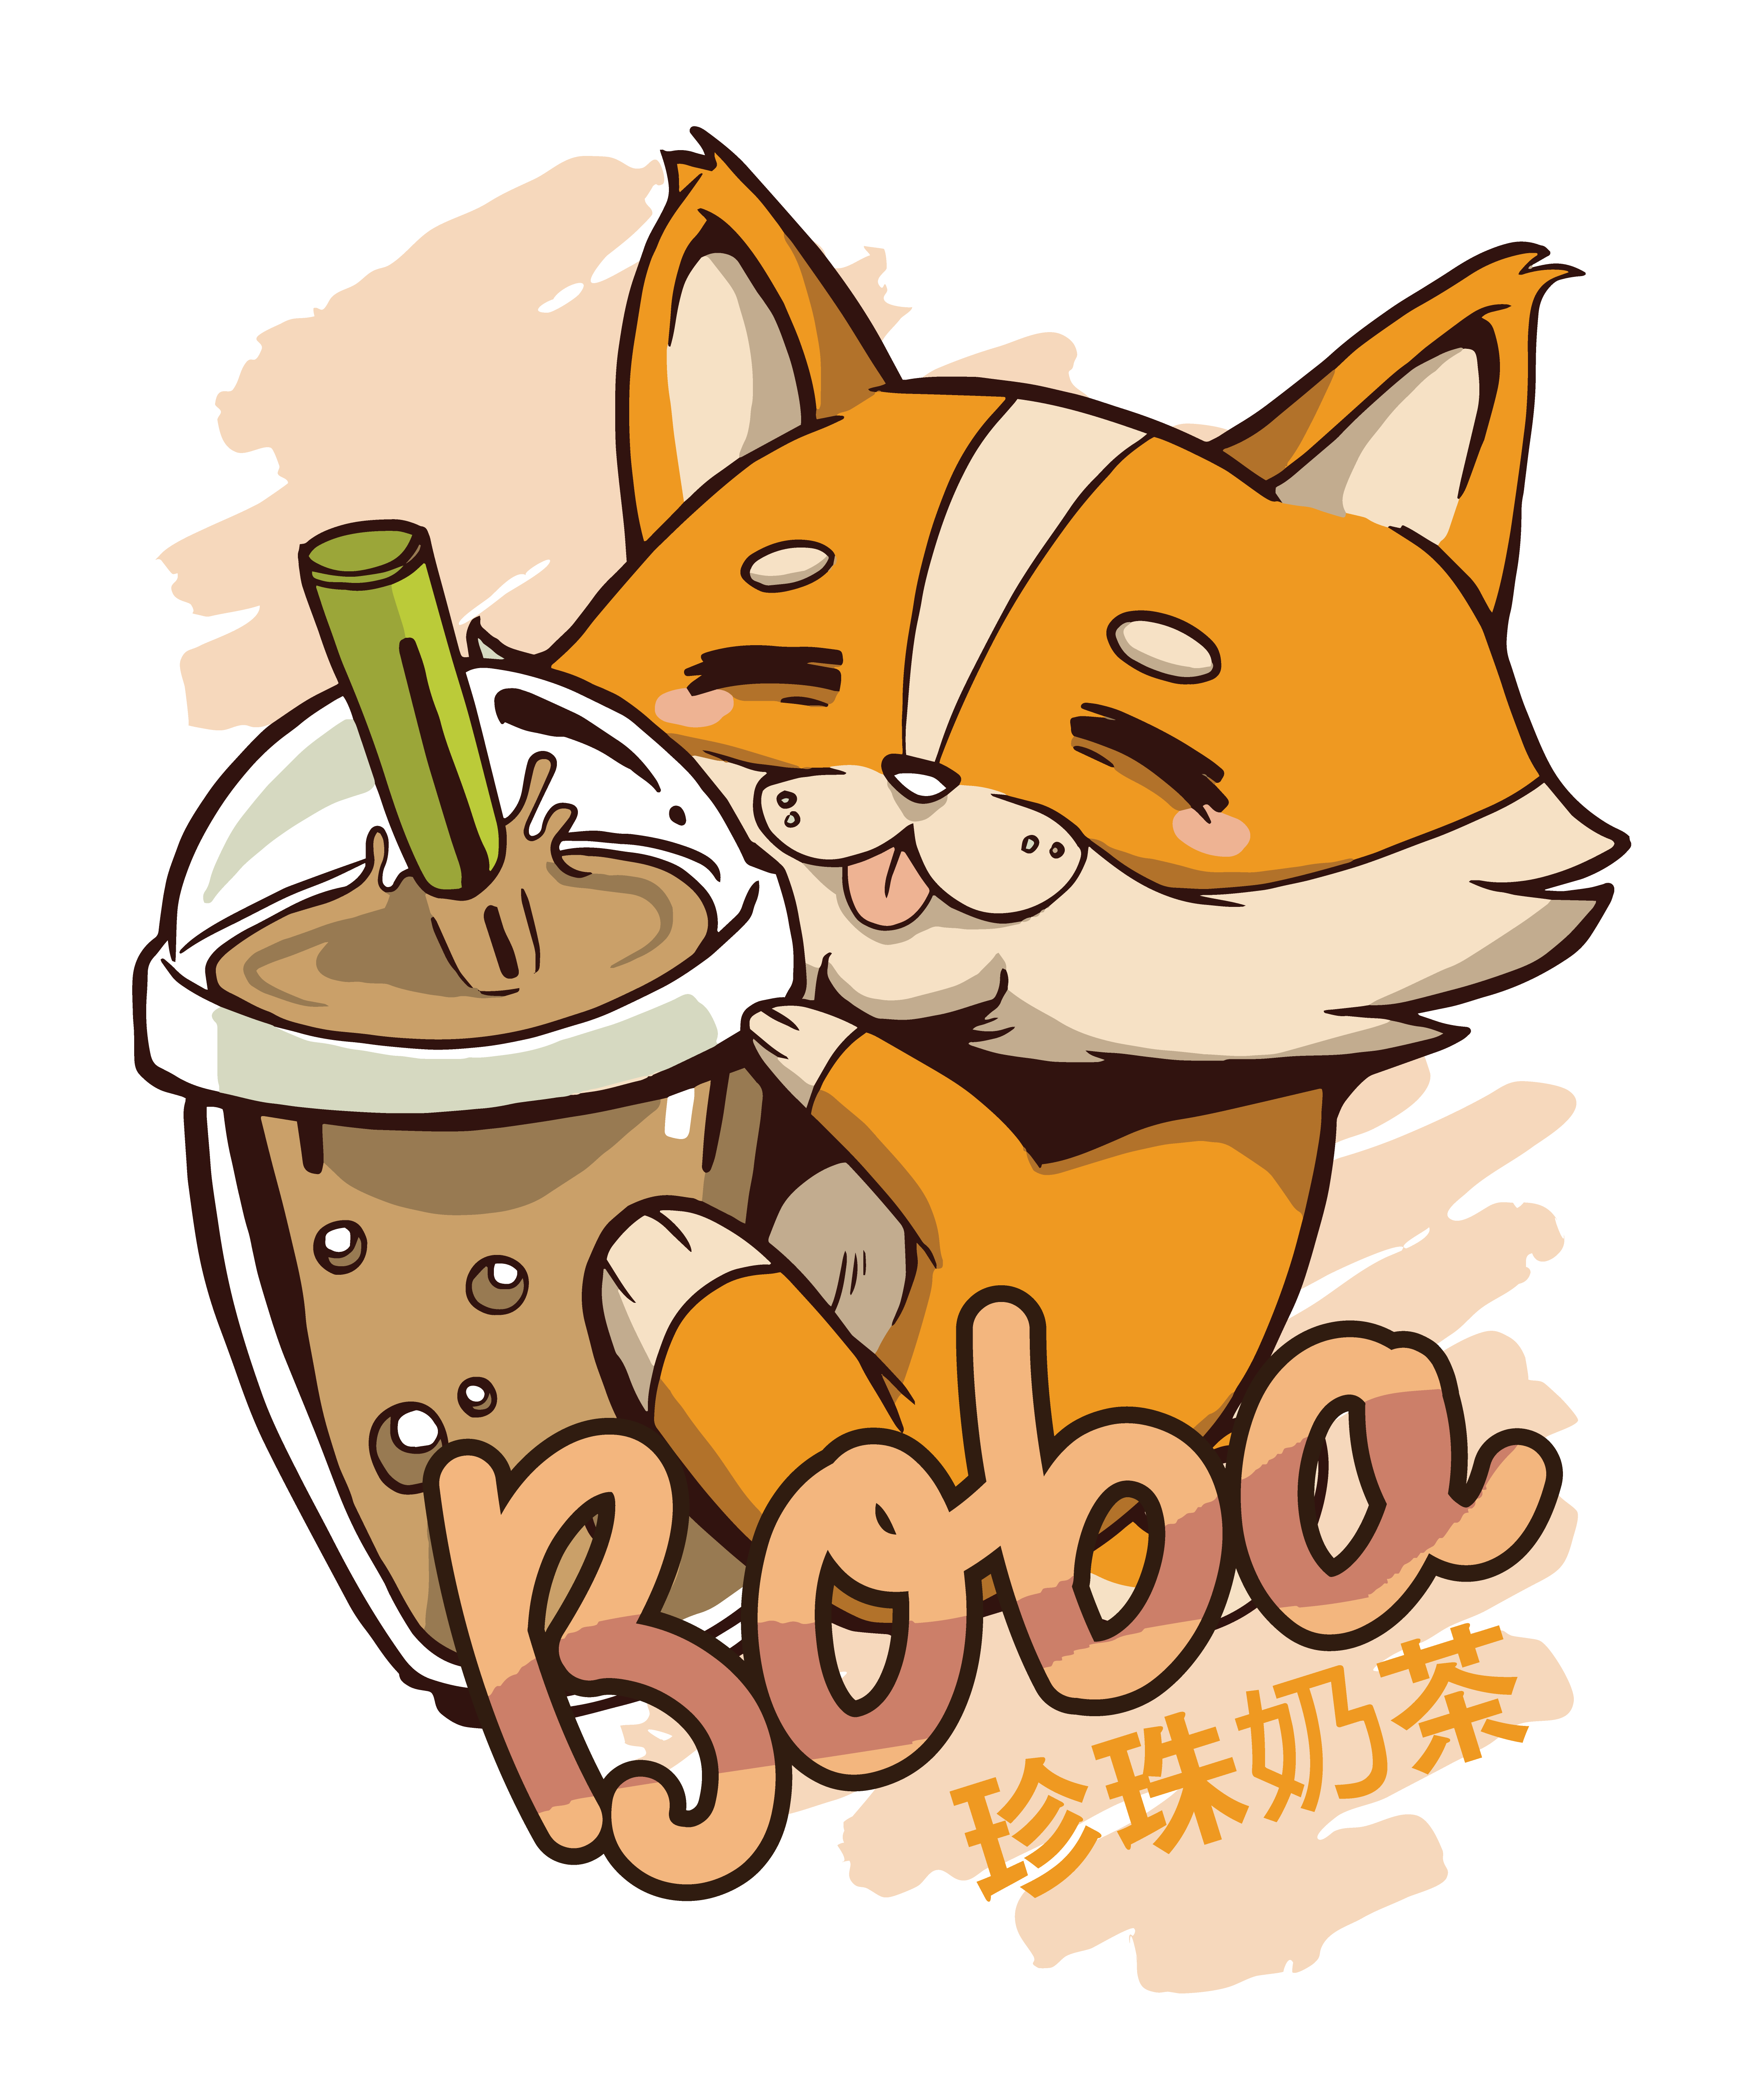 Introducing the latest anime inspired Japenese craze: The handsfree boba  tea challenge